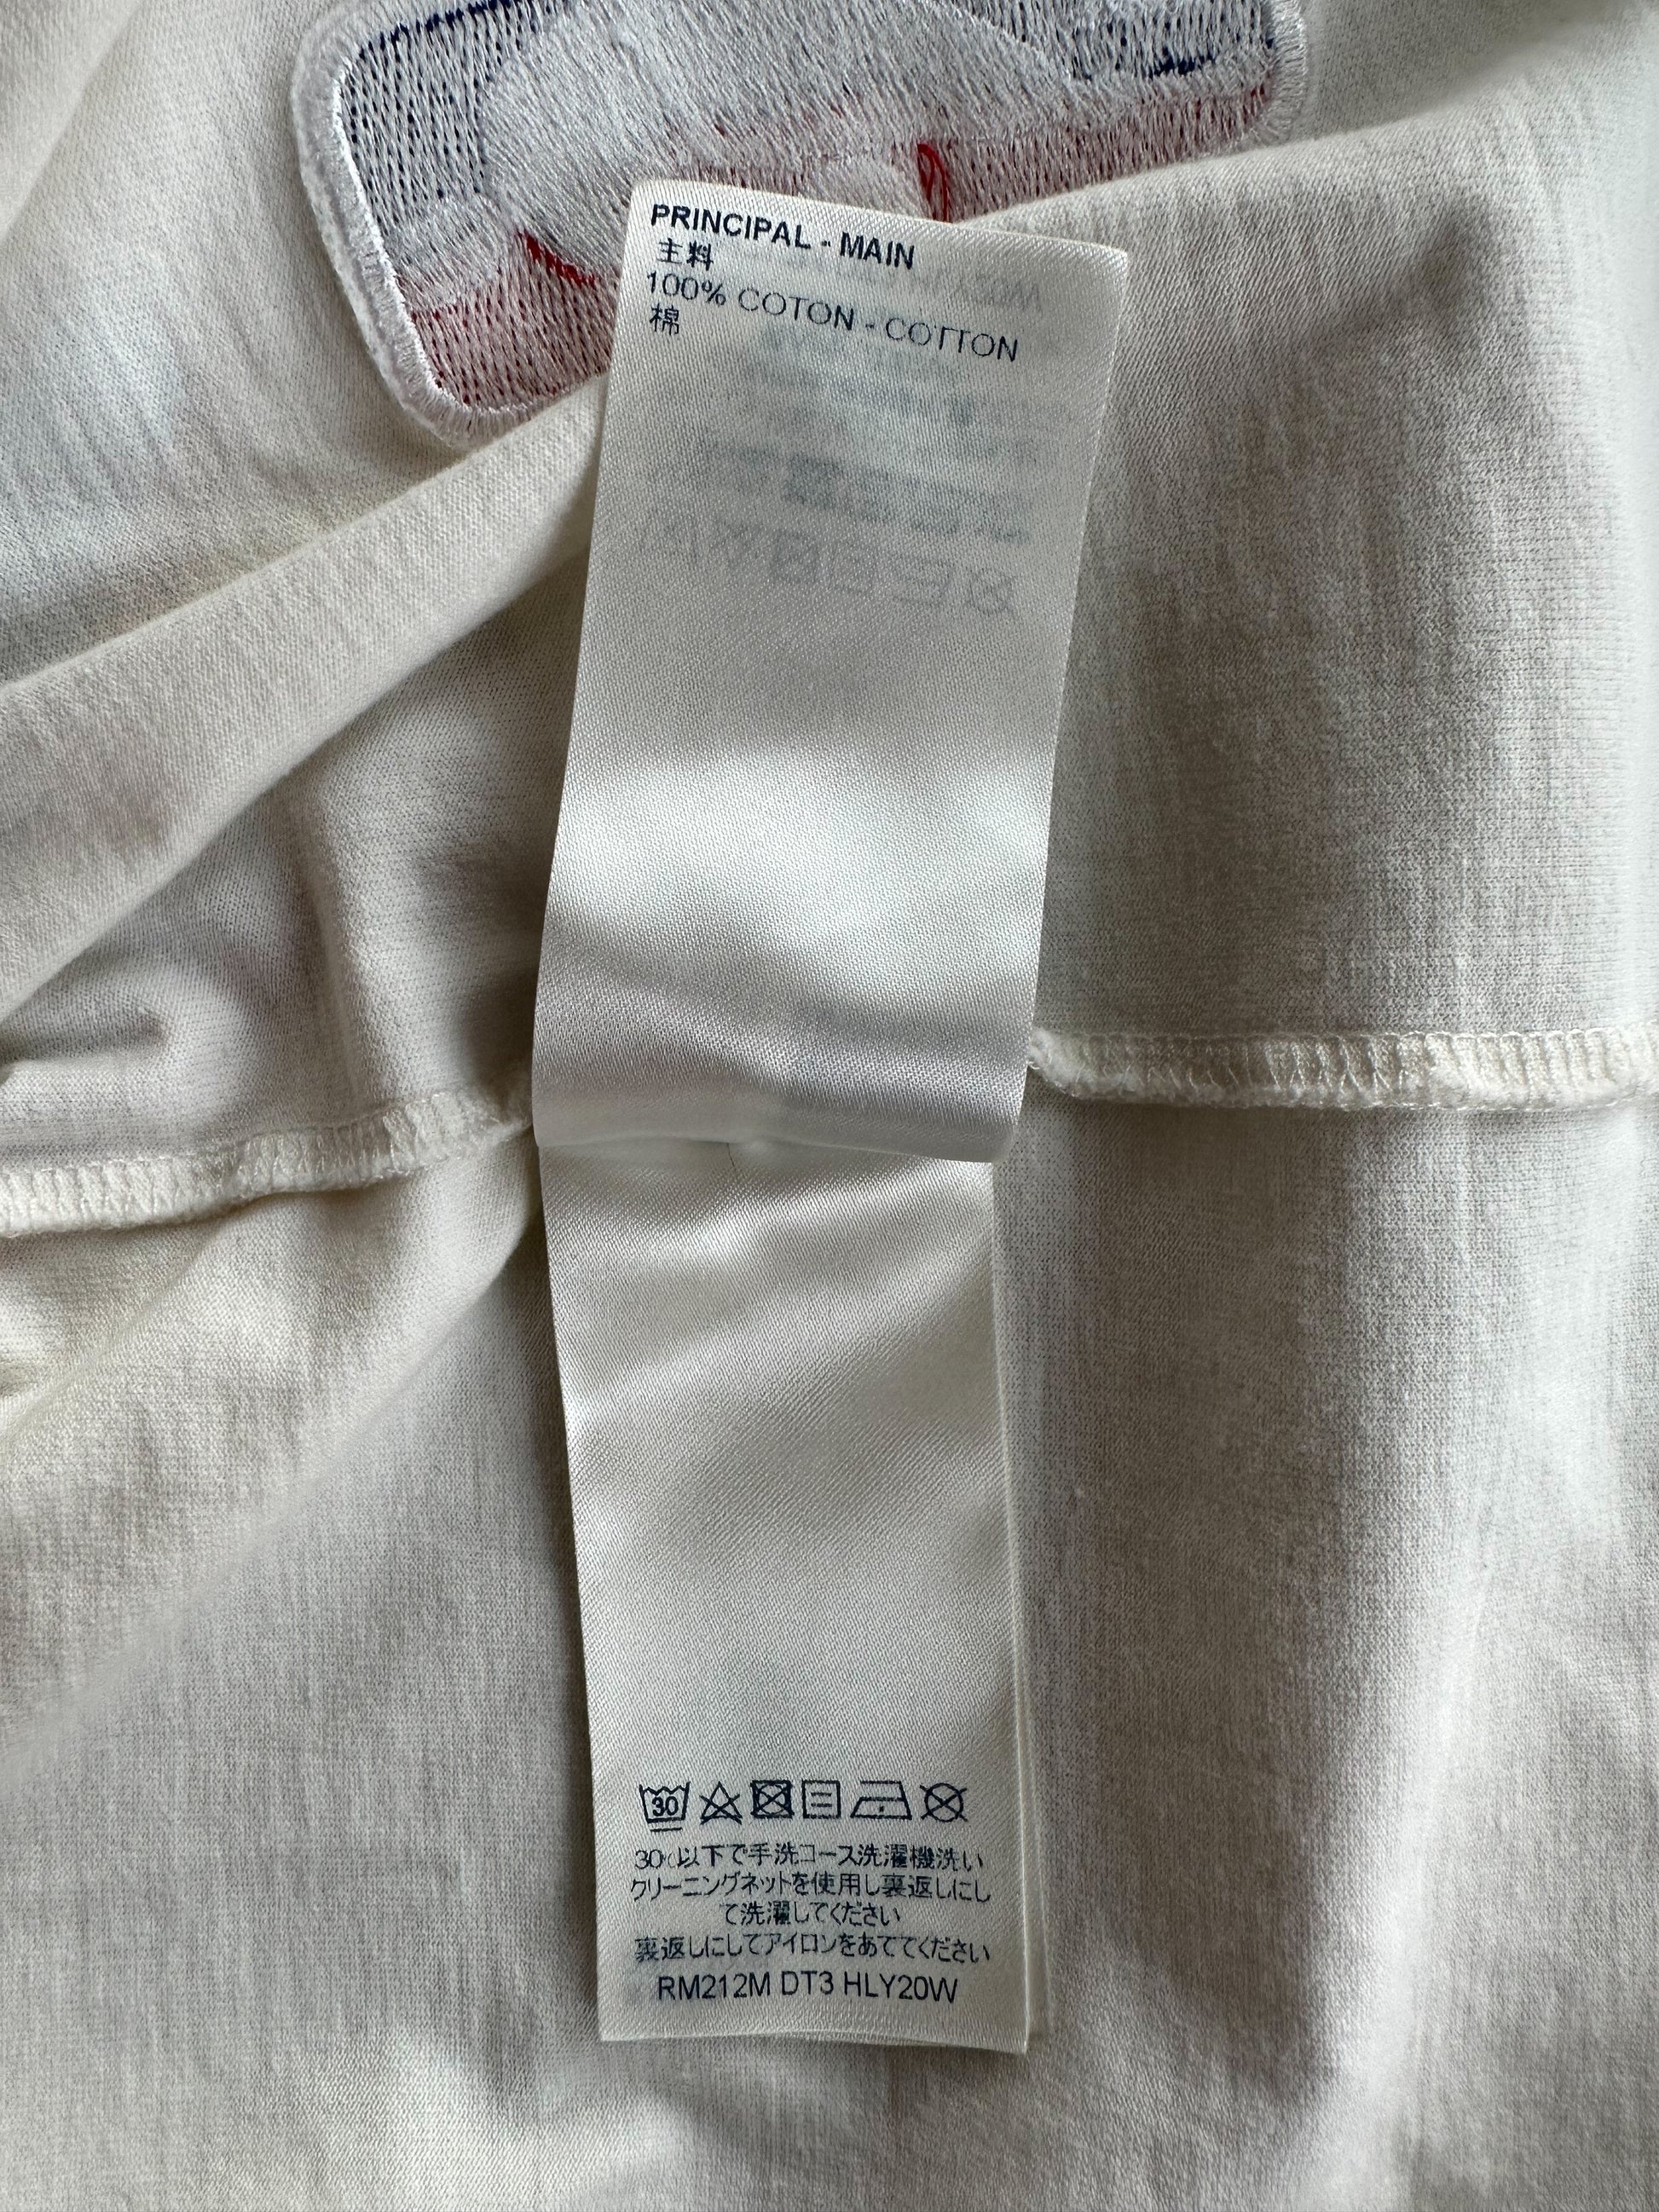 Louis Vuitton NBA Basketball Embroidered White T-shirt